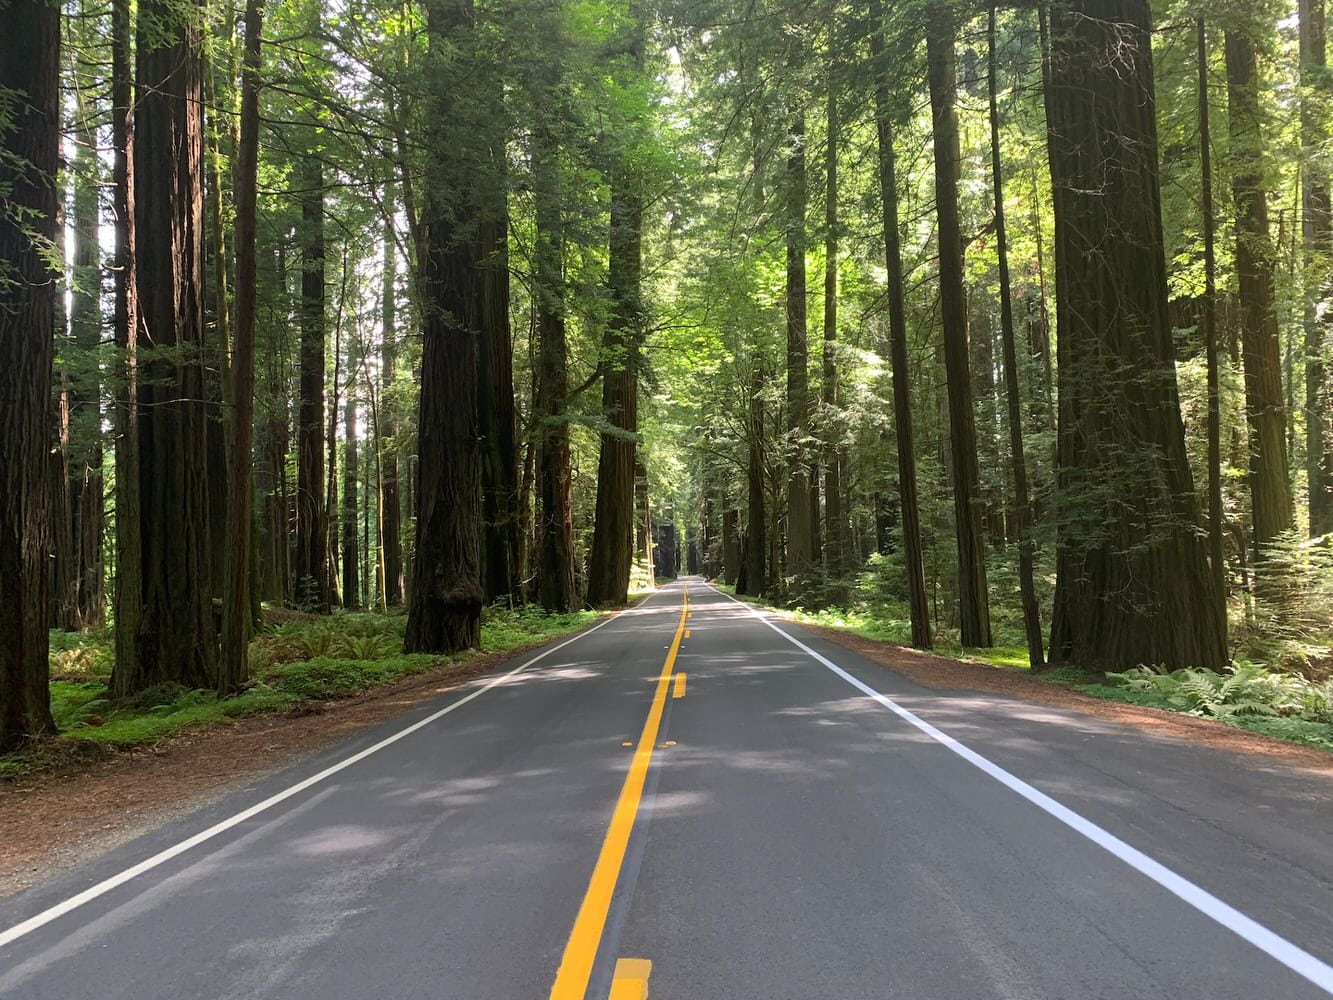 Humboldt's Redwood Symphony: A California Forest Elopement Dream